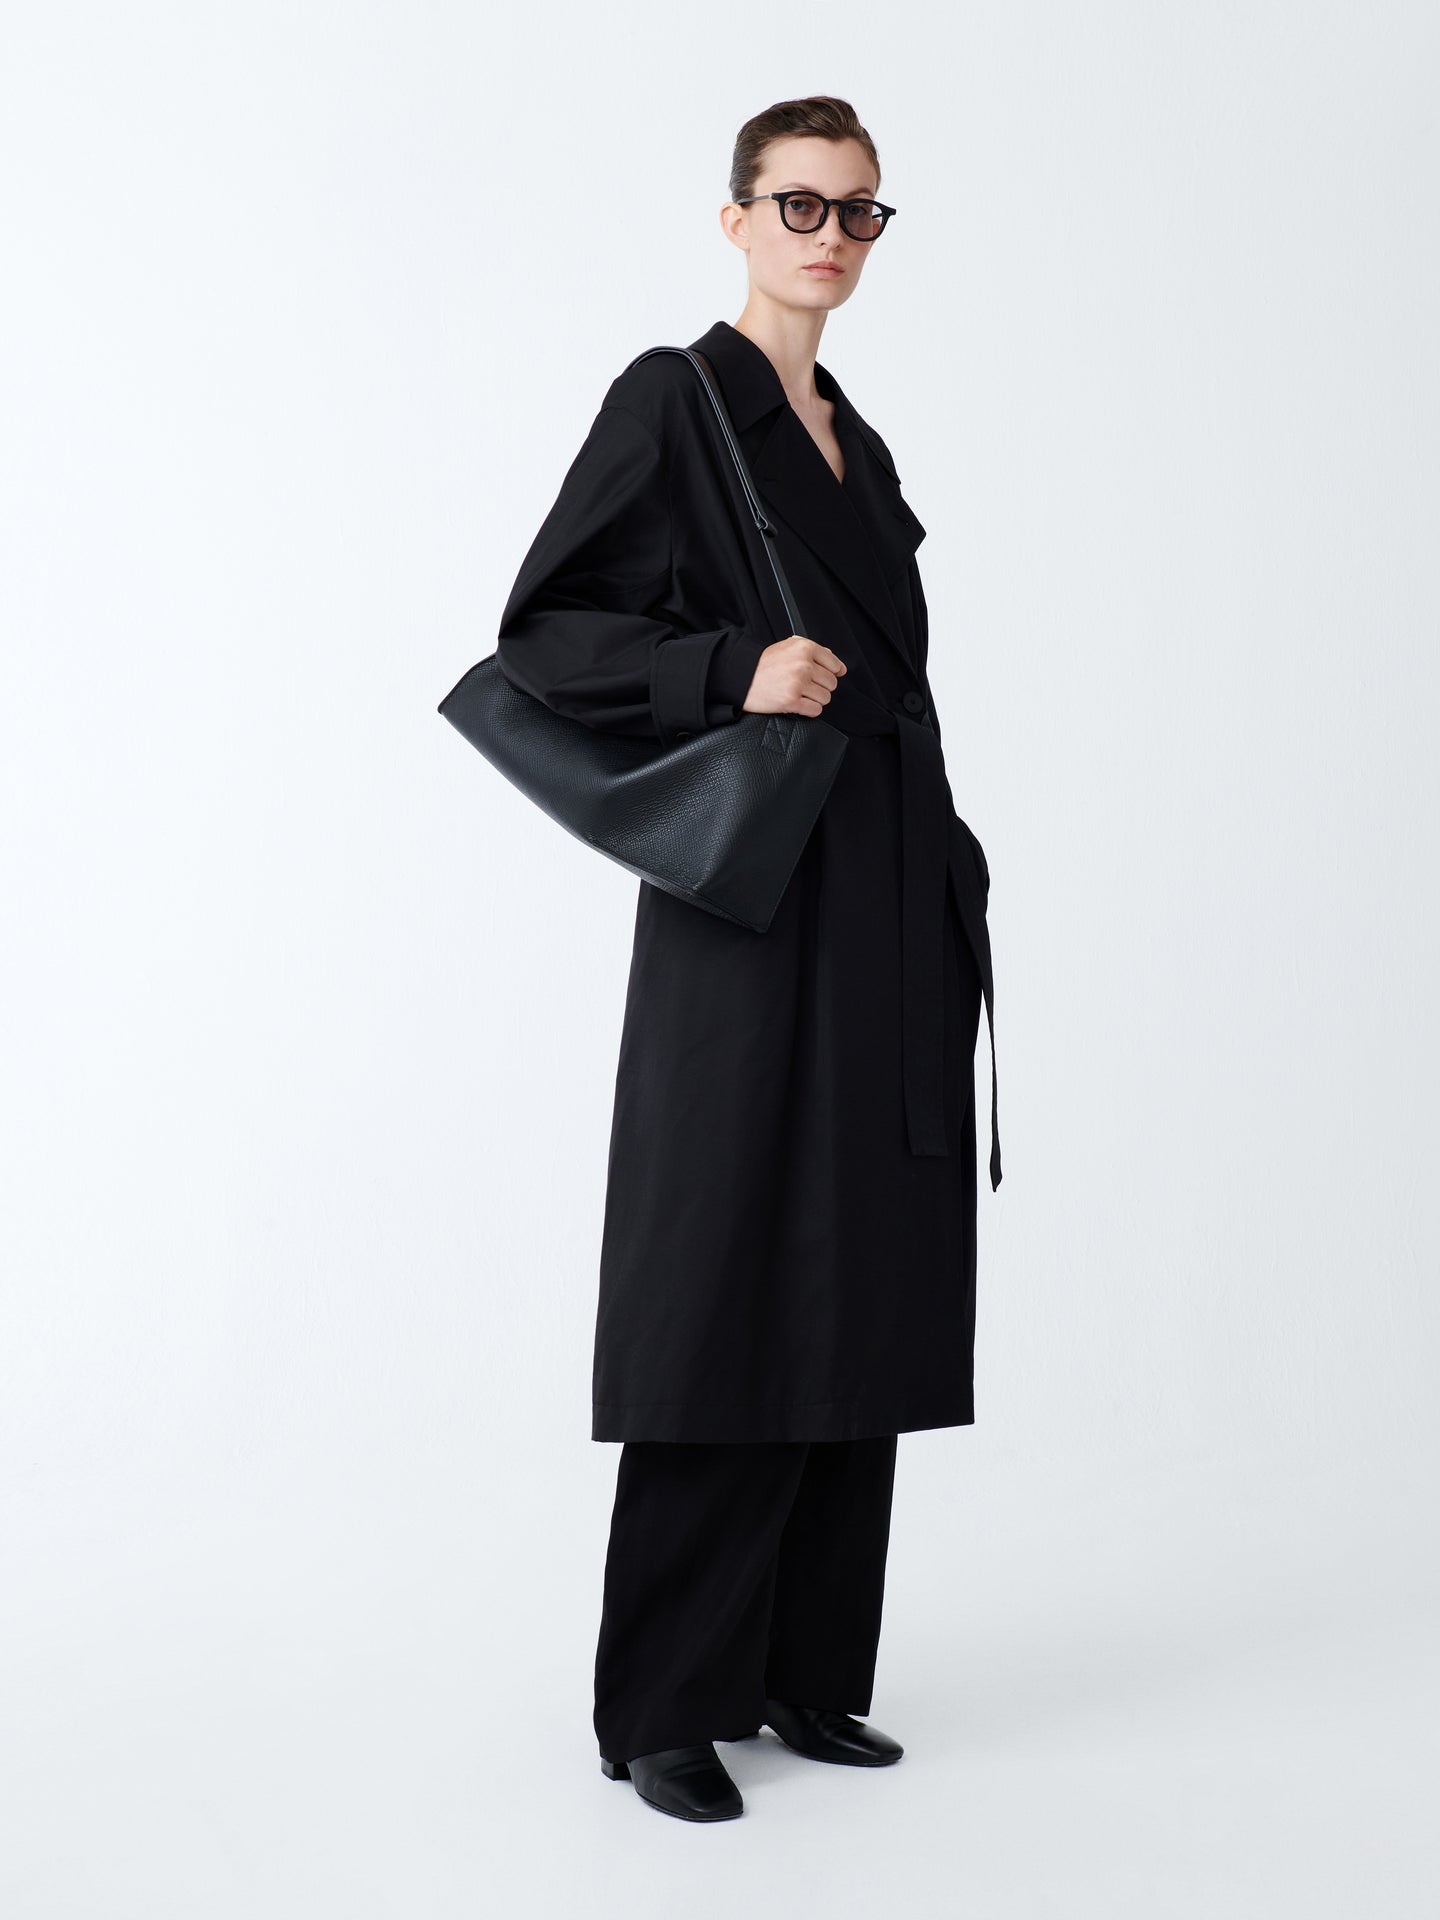 Shiboru Leather Bag in Black